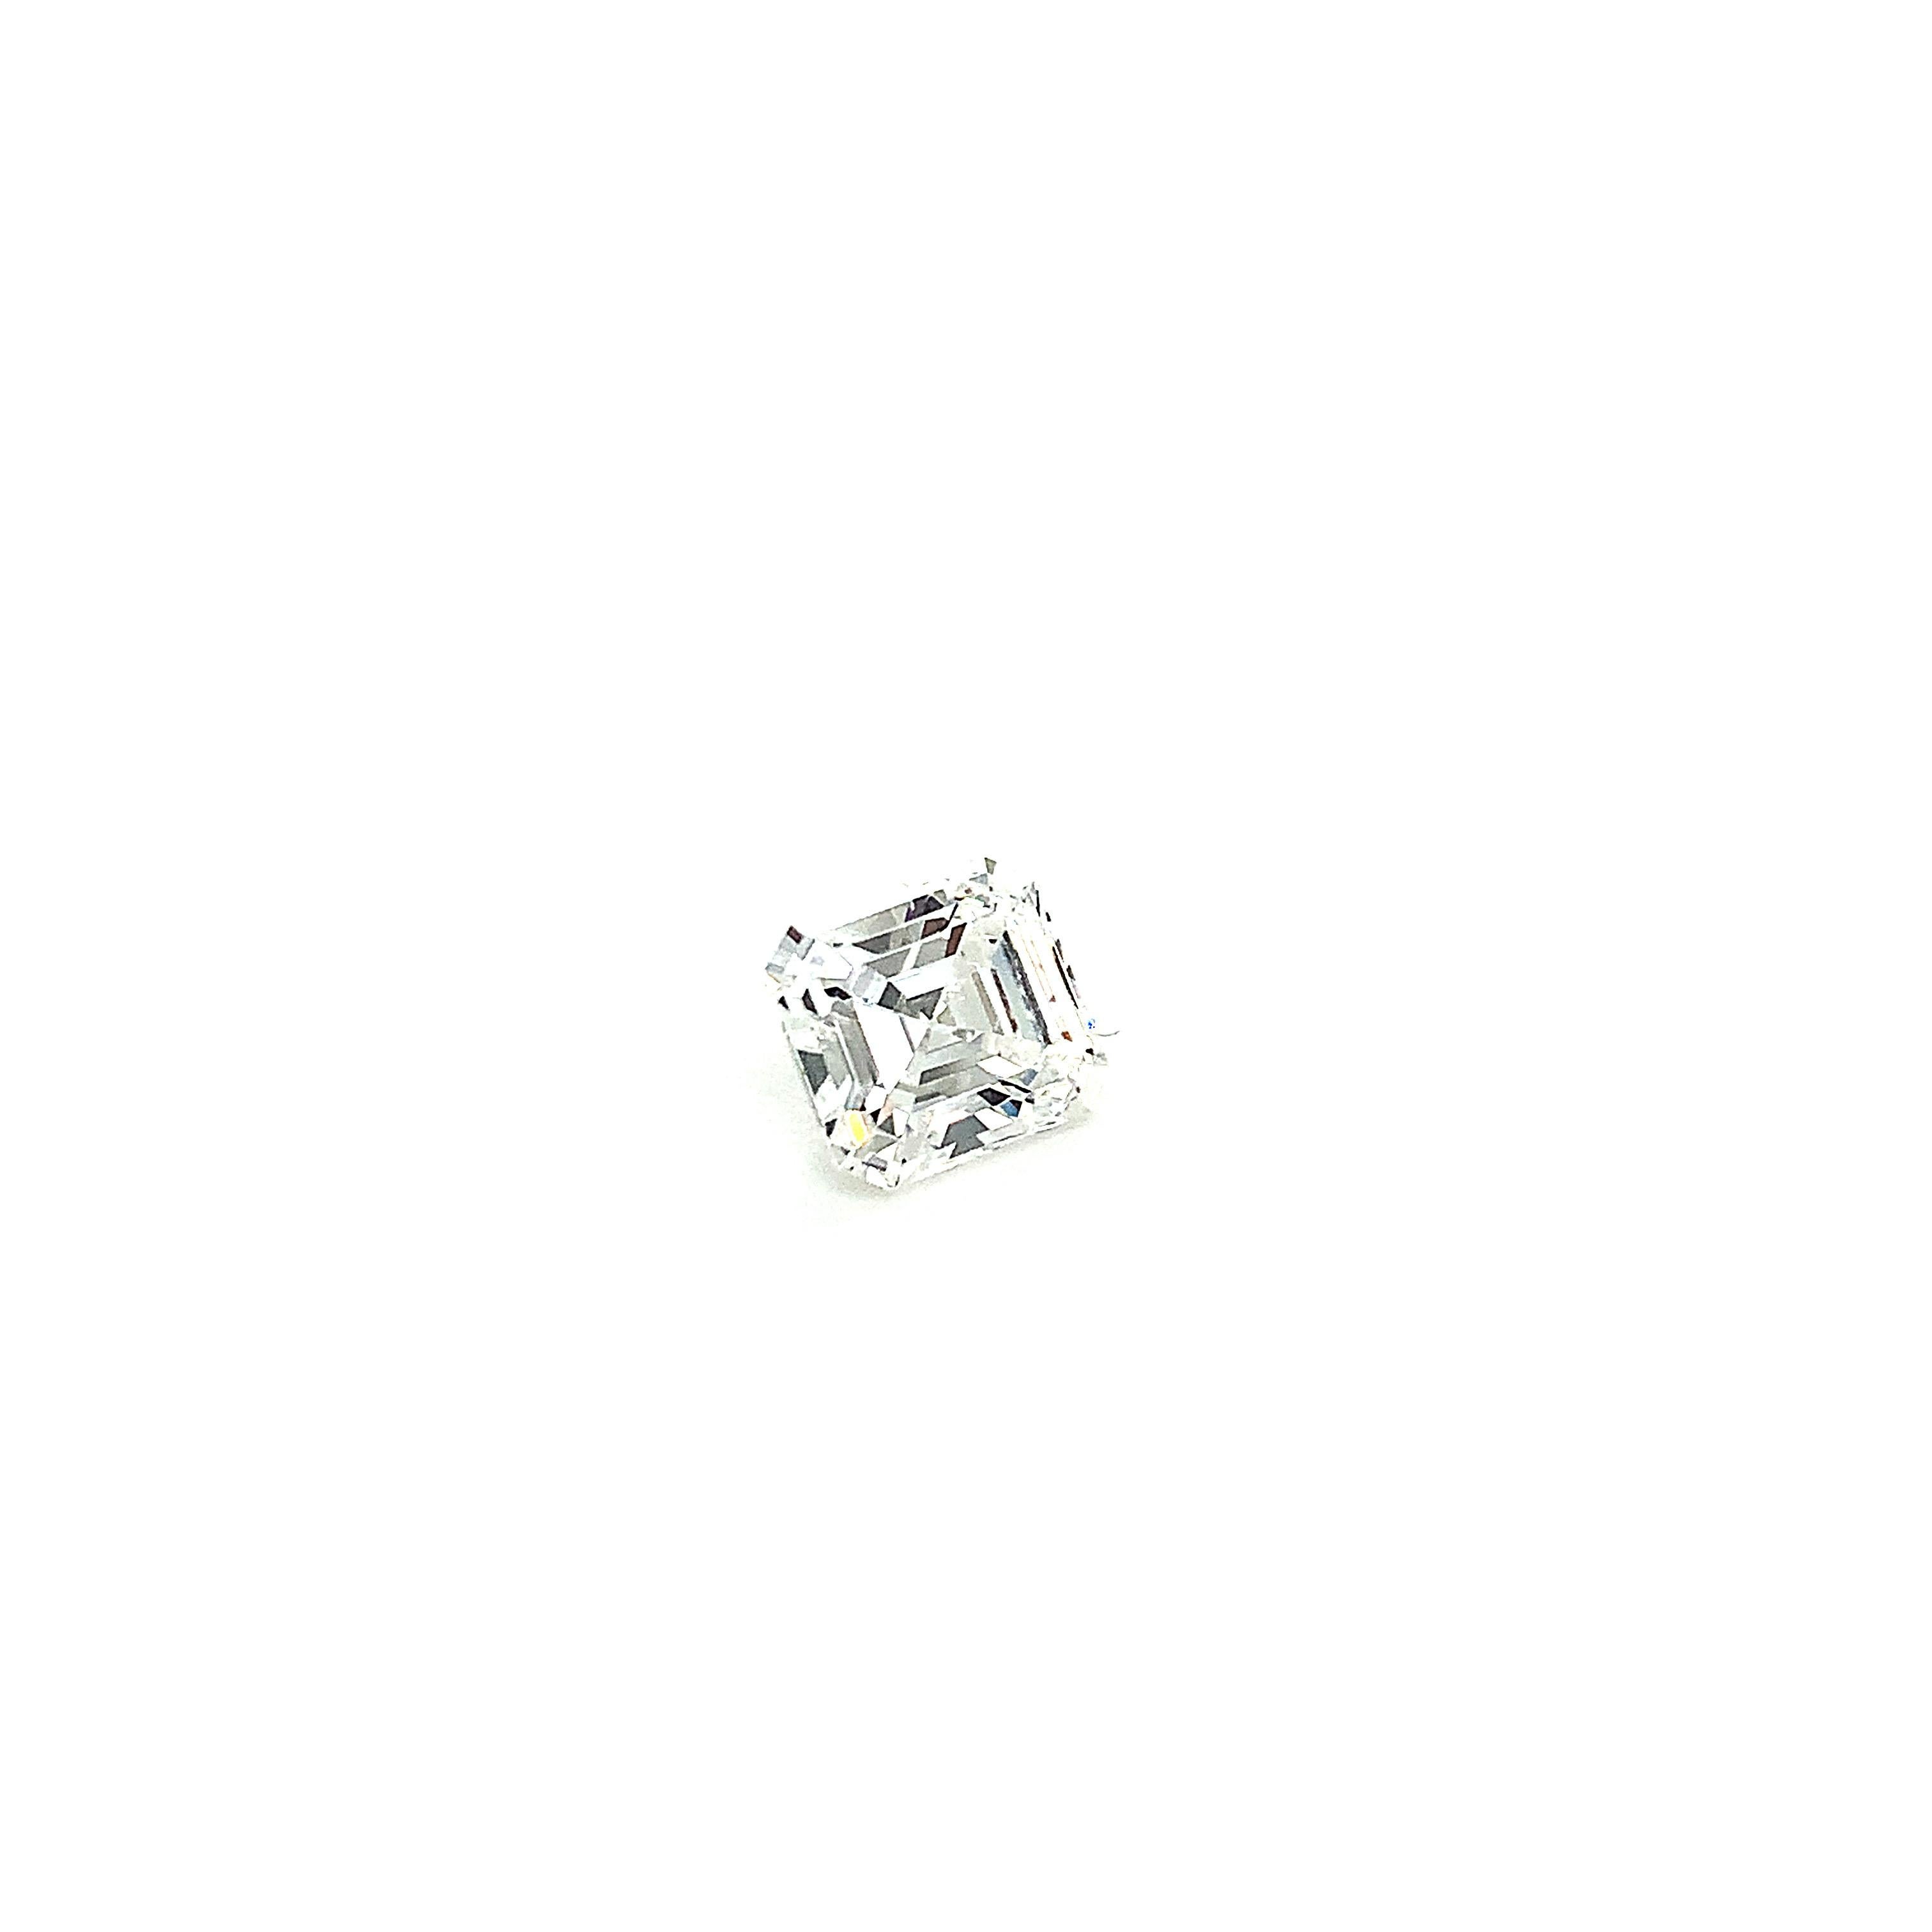 Women's or Men's GIA Certified 2.01 Carat Emerald Cut Diamond For Sale